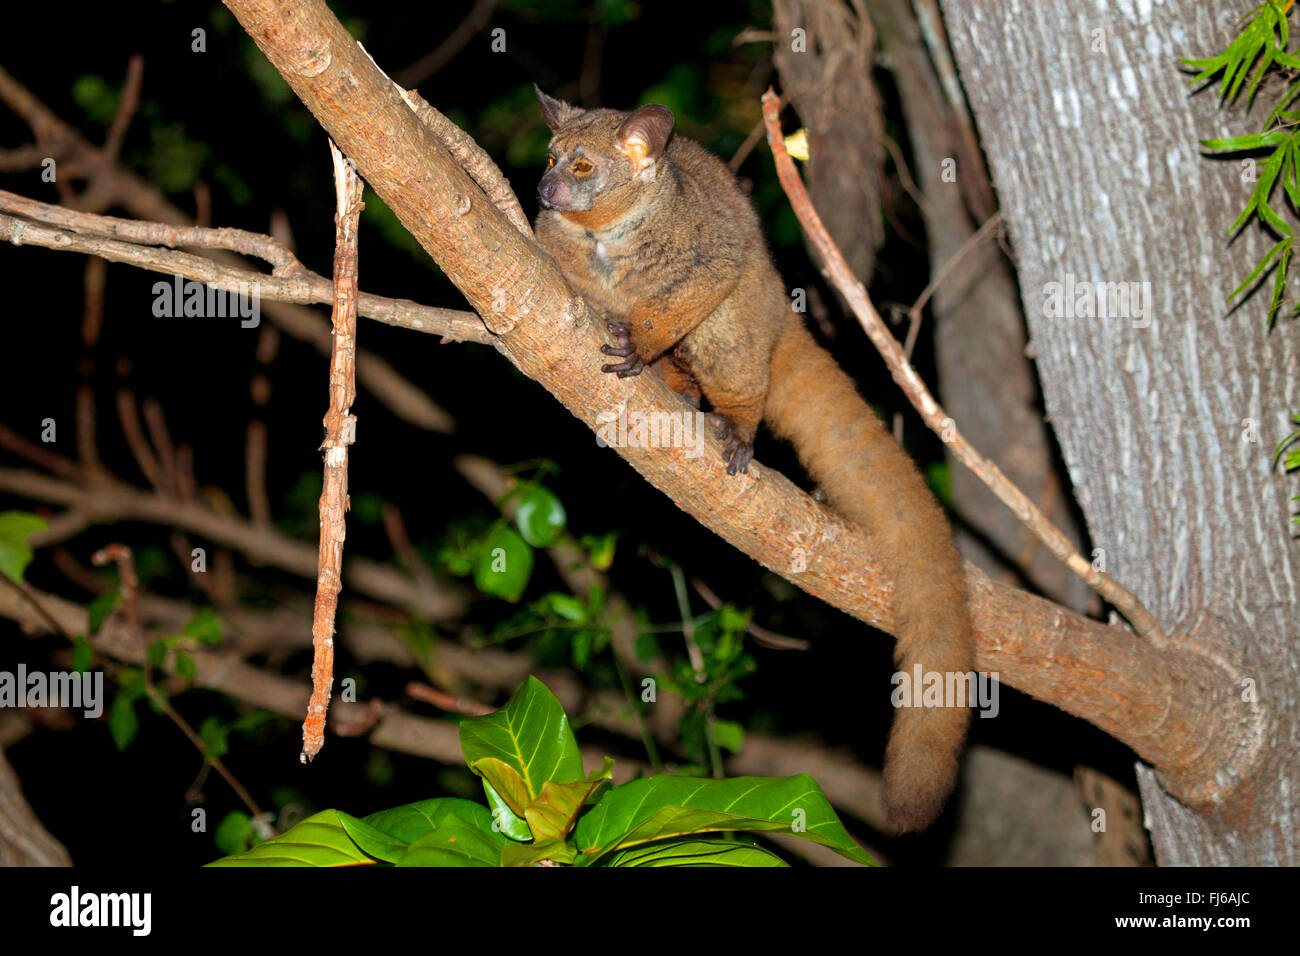 Senegal bush baby, lesser bush baby, Senegal galago (Galago senegalensis), climbing on a branch, in the evening, South Africa Stock Photo